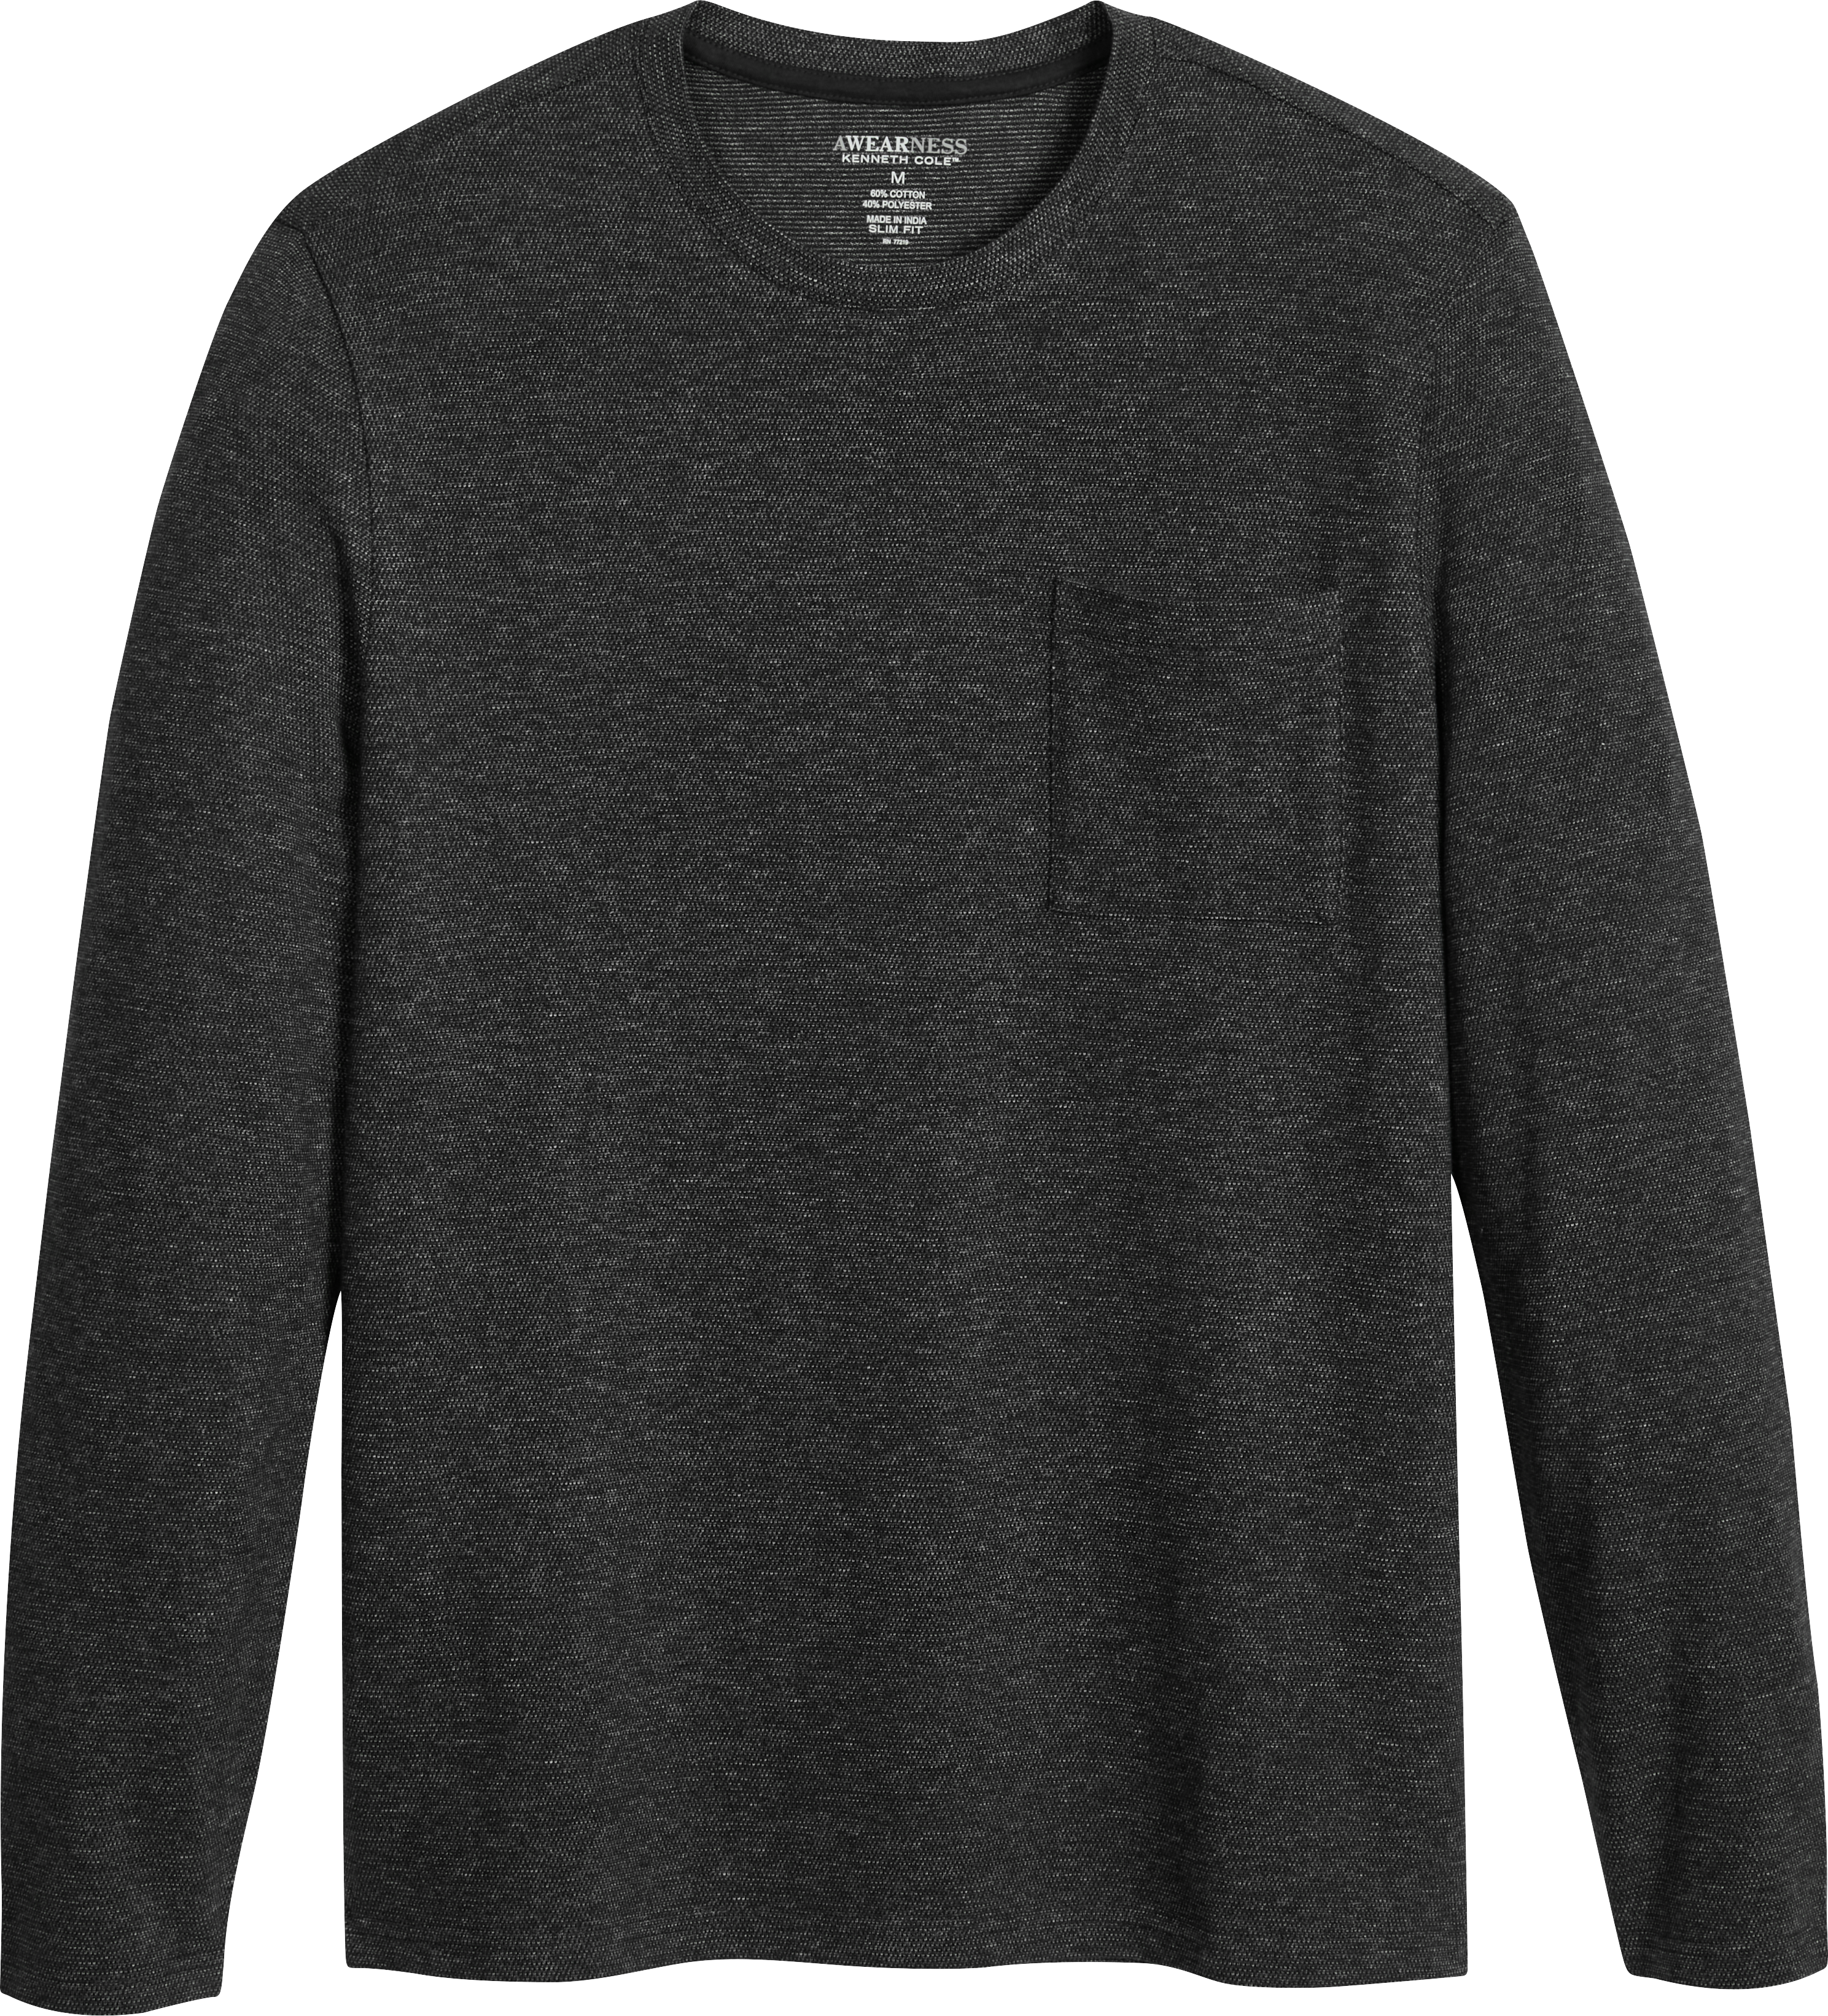 Awearness Kenneth Cole Modern Fit Crew Neck T-Shirt, Gray Matrix